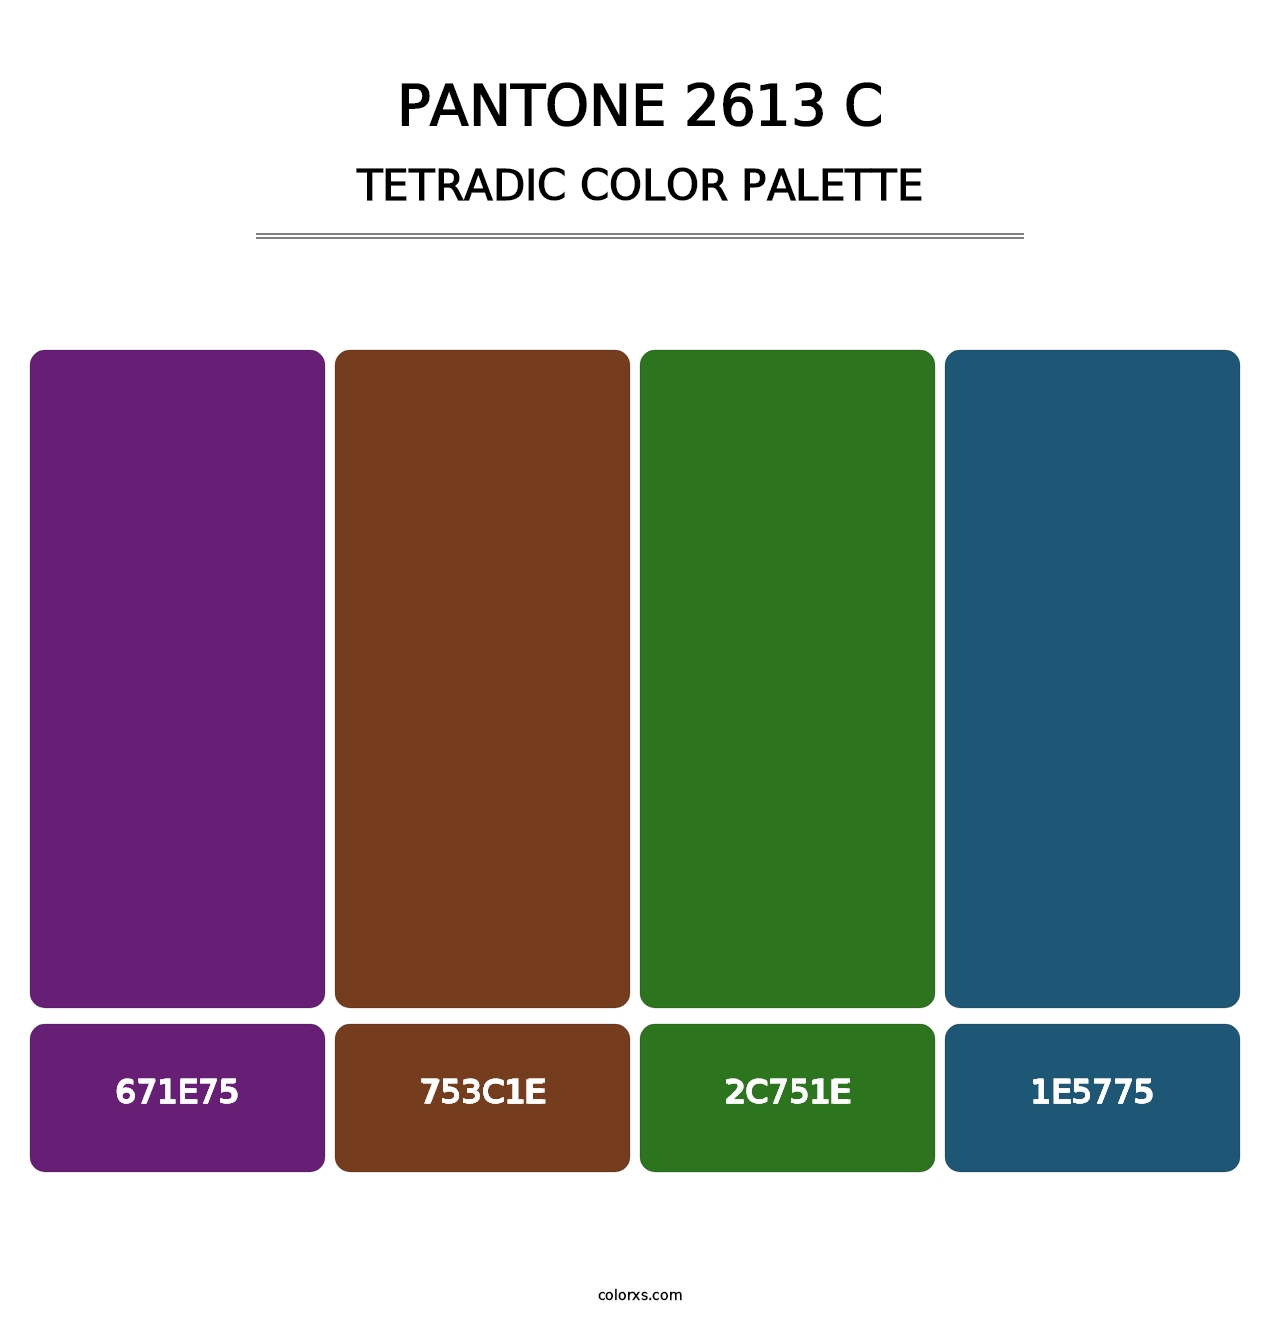 PANTONE 2613 C - Tetradic Color Palette